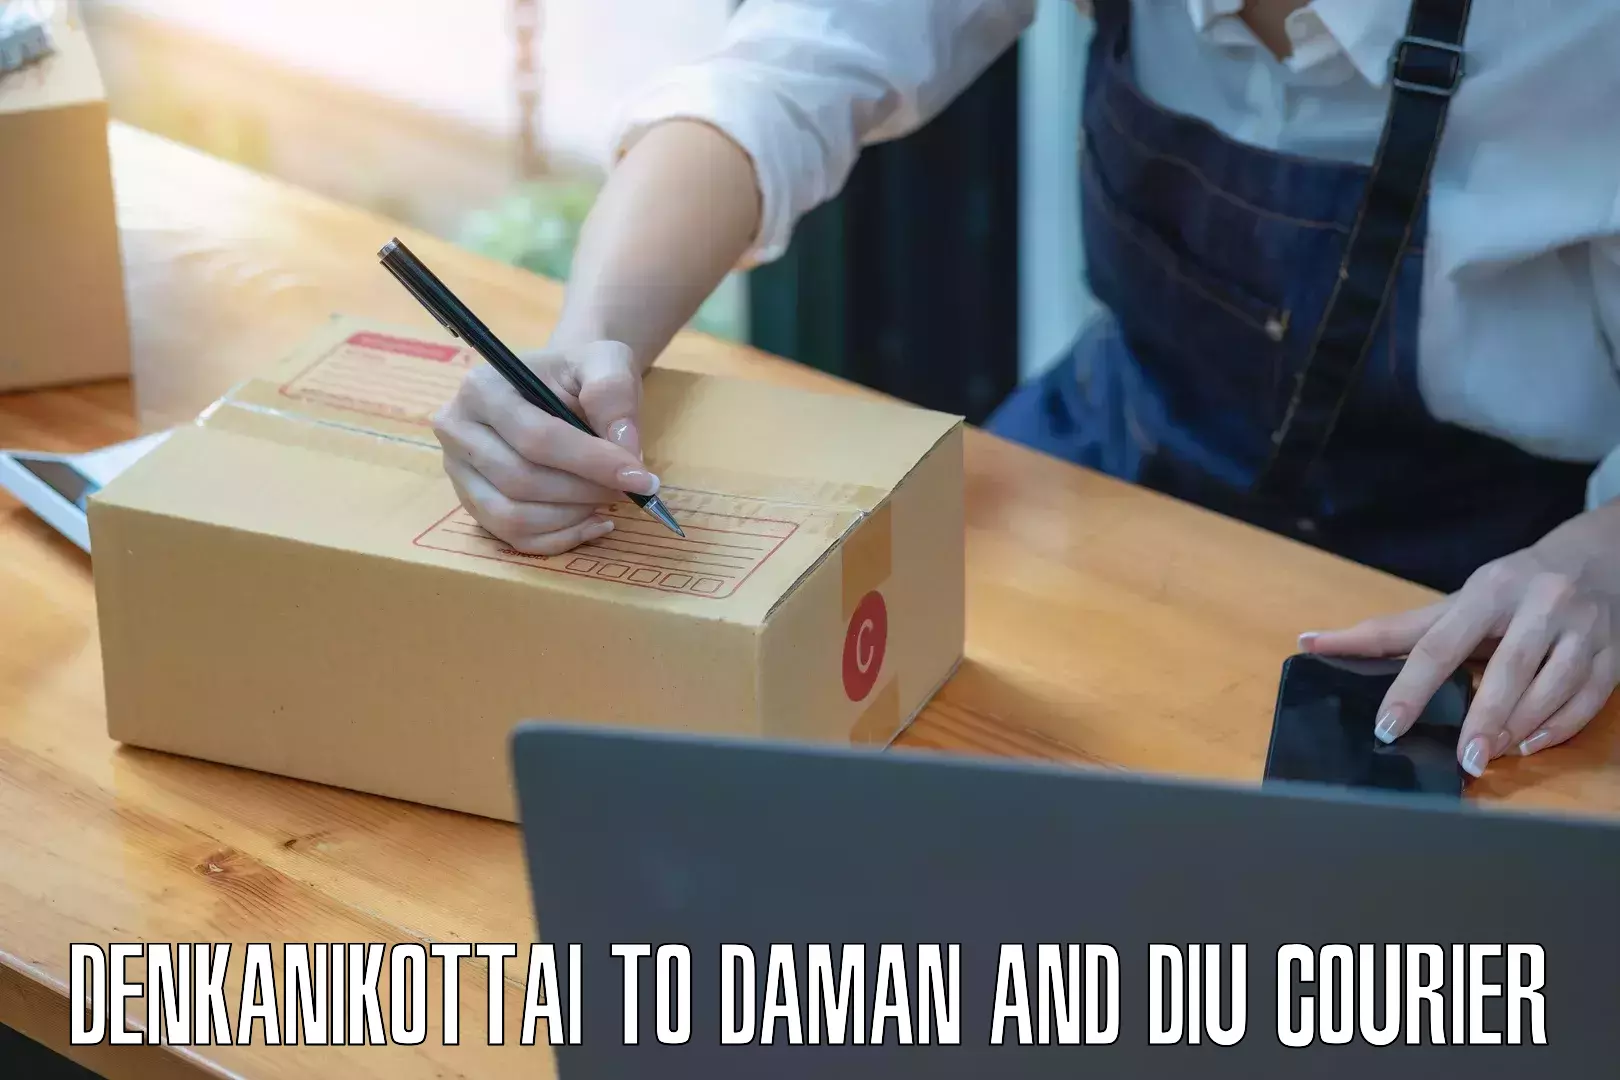 Flexible delivery schedules Denkanikottai to Daman